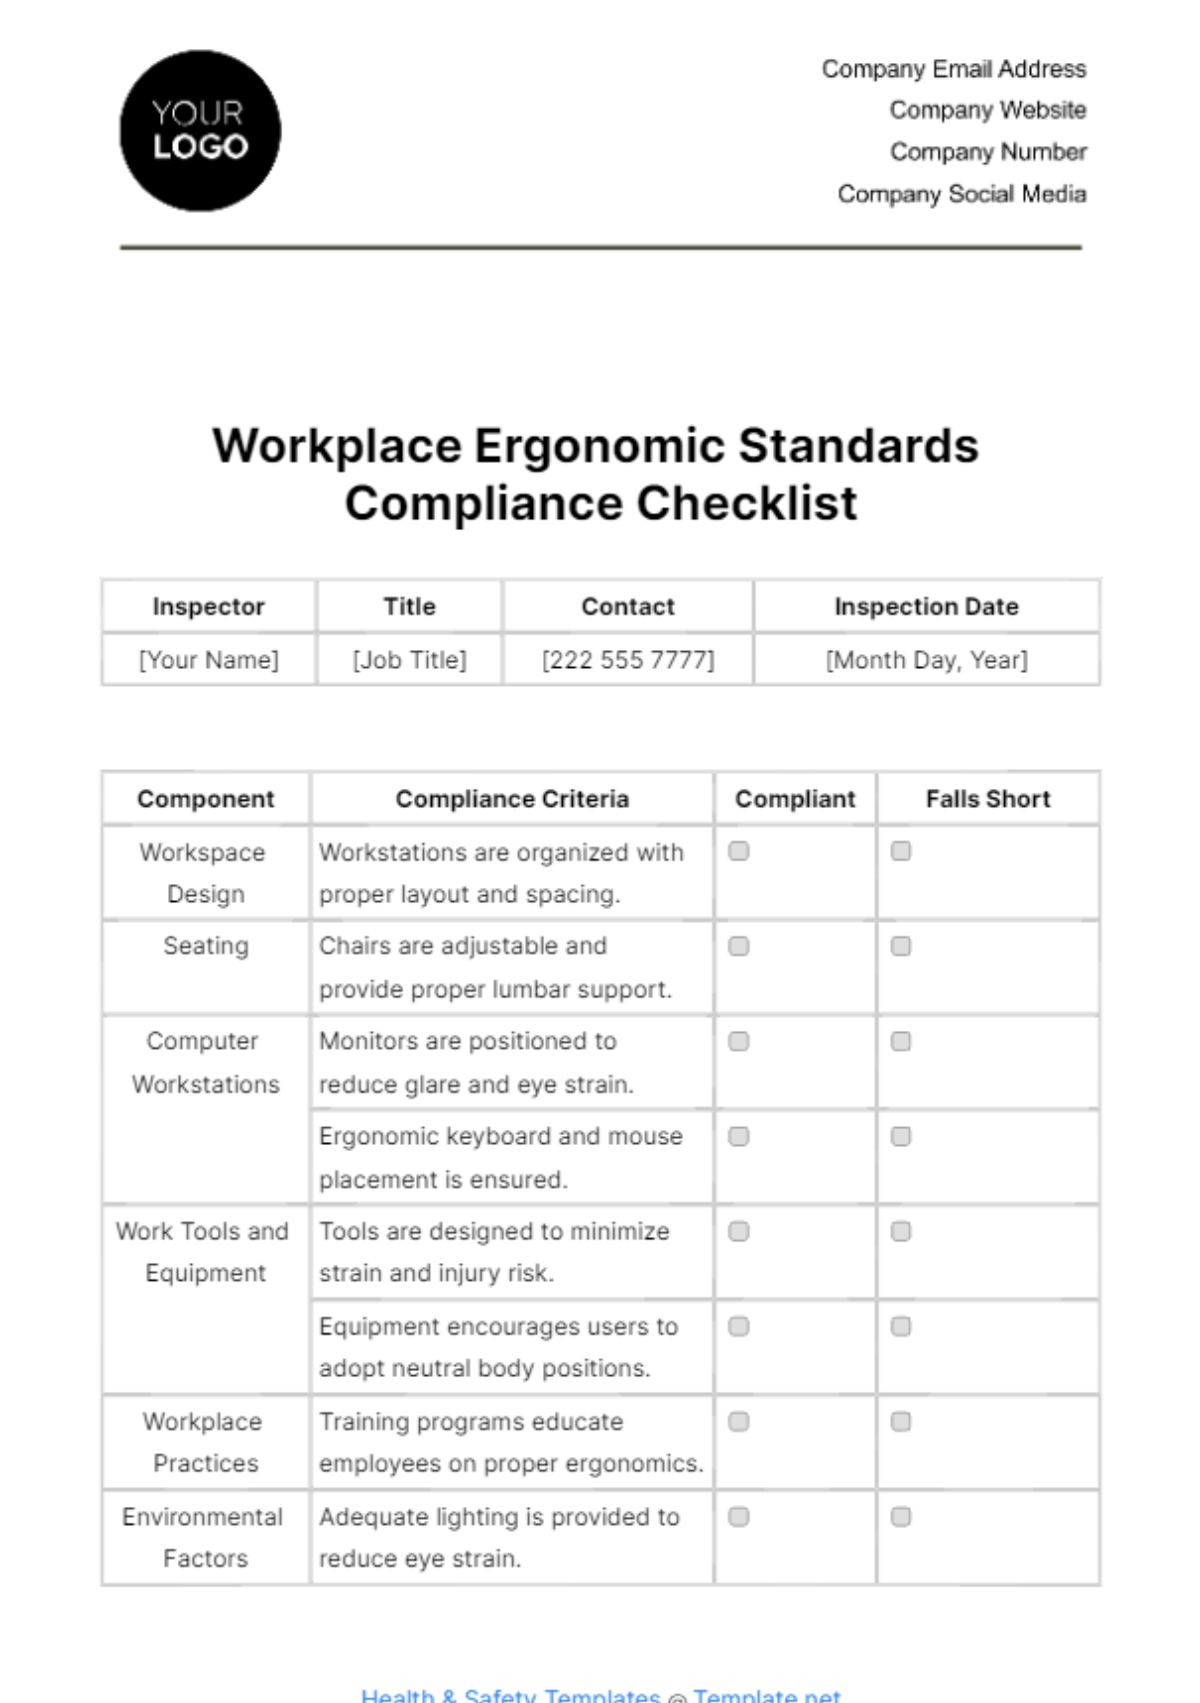 Free Workplace Ergonomic Standards Compliance Checklist Template